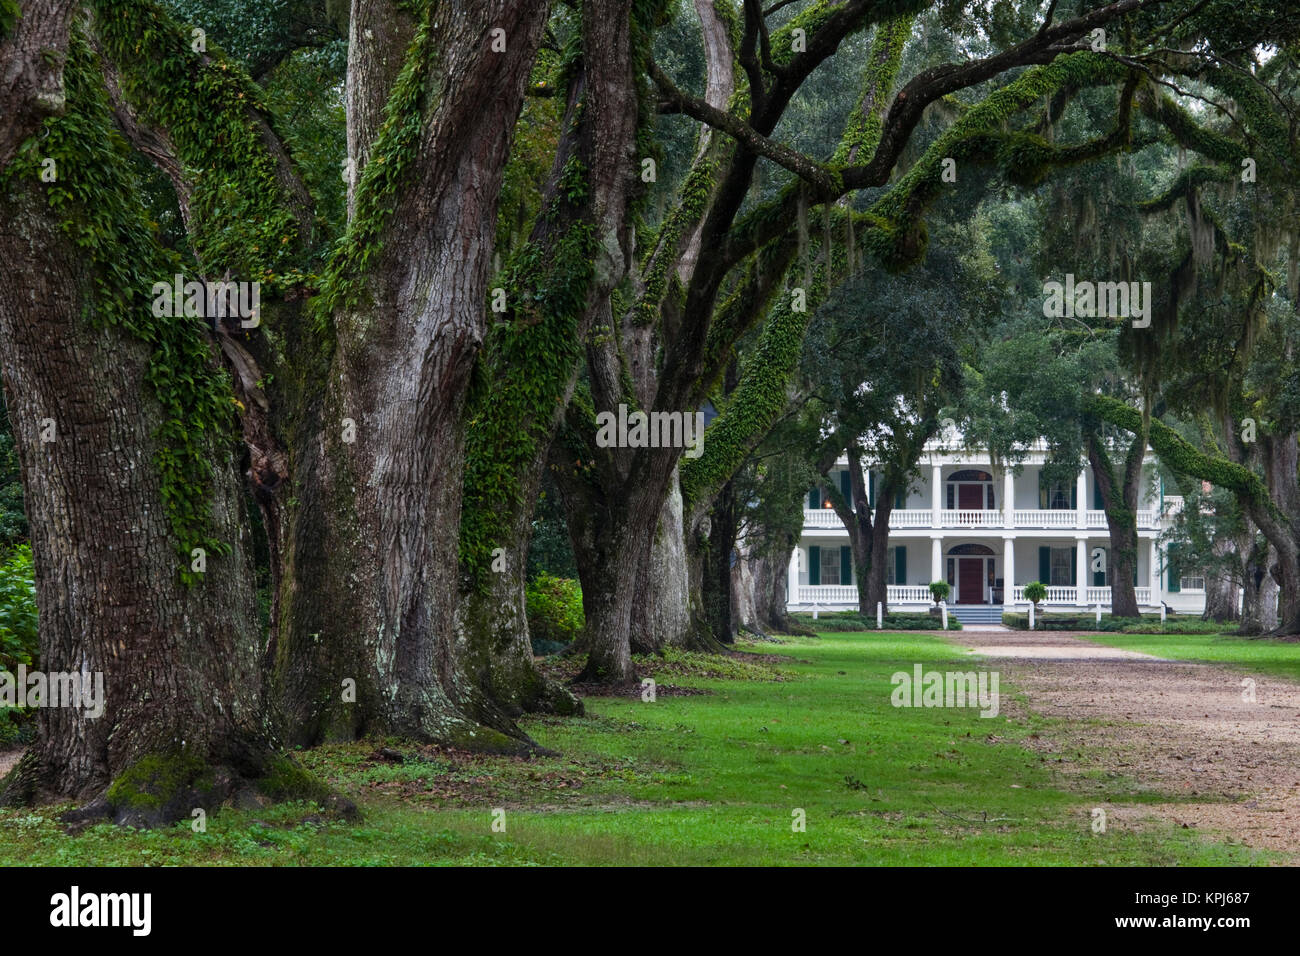 USA, Louisiana, St. Francisville. Rosedown Planatation, b. 1832, oak tree canopy driveway. Stock Photo